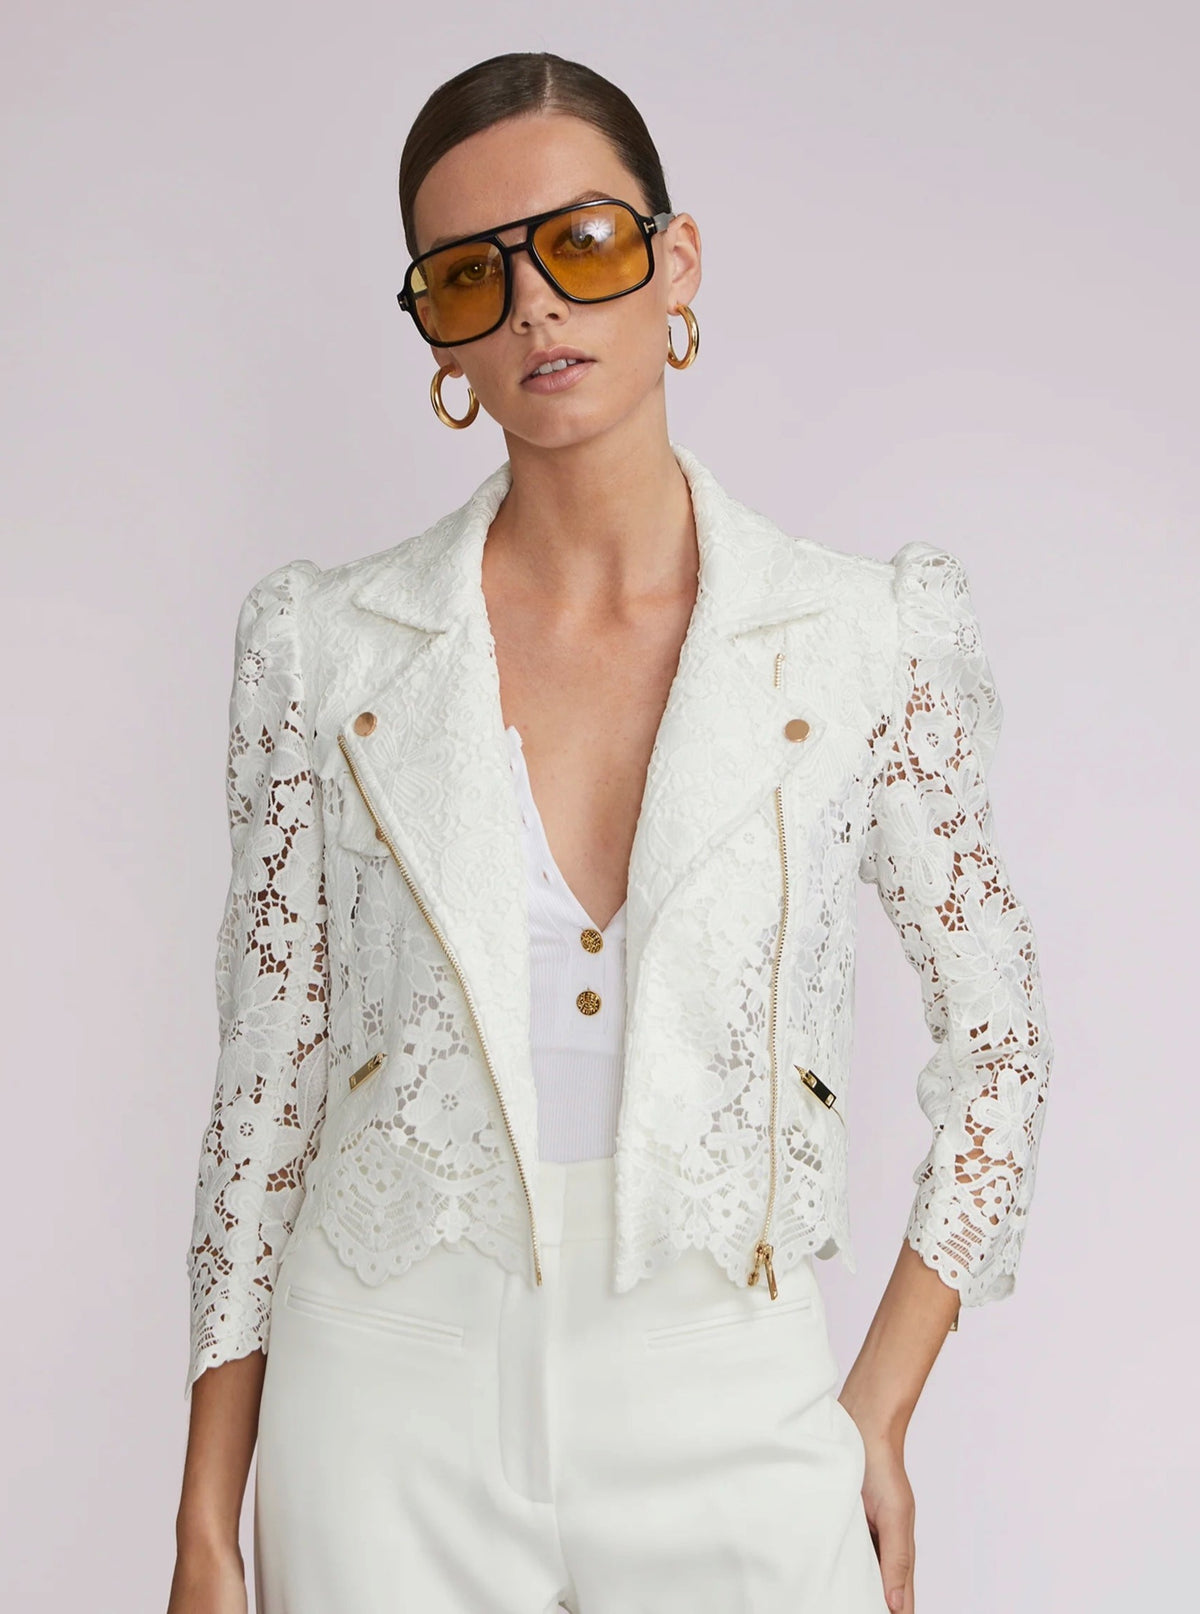 Generation Love Malibu Lace Jacket in White